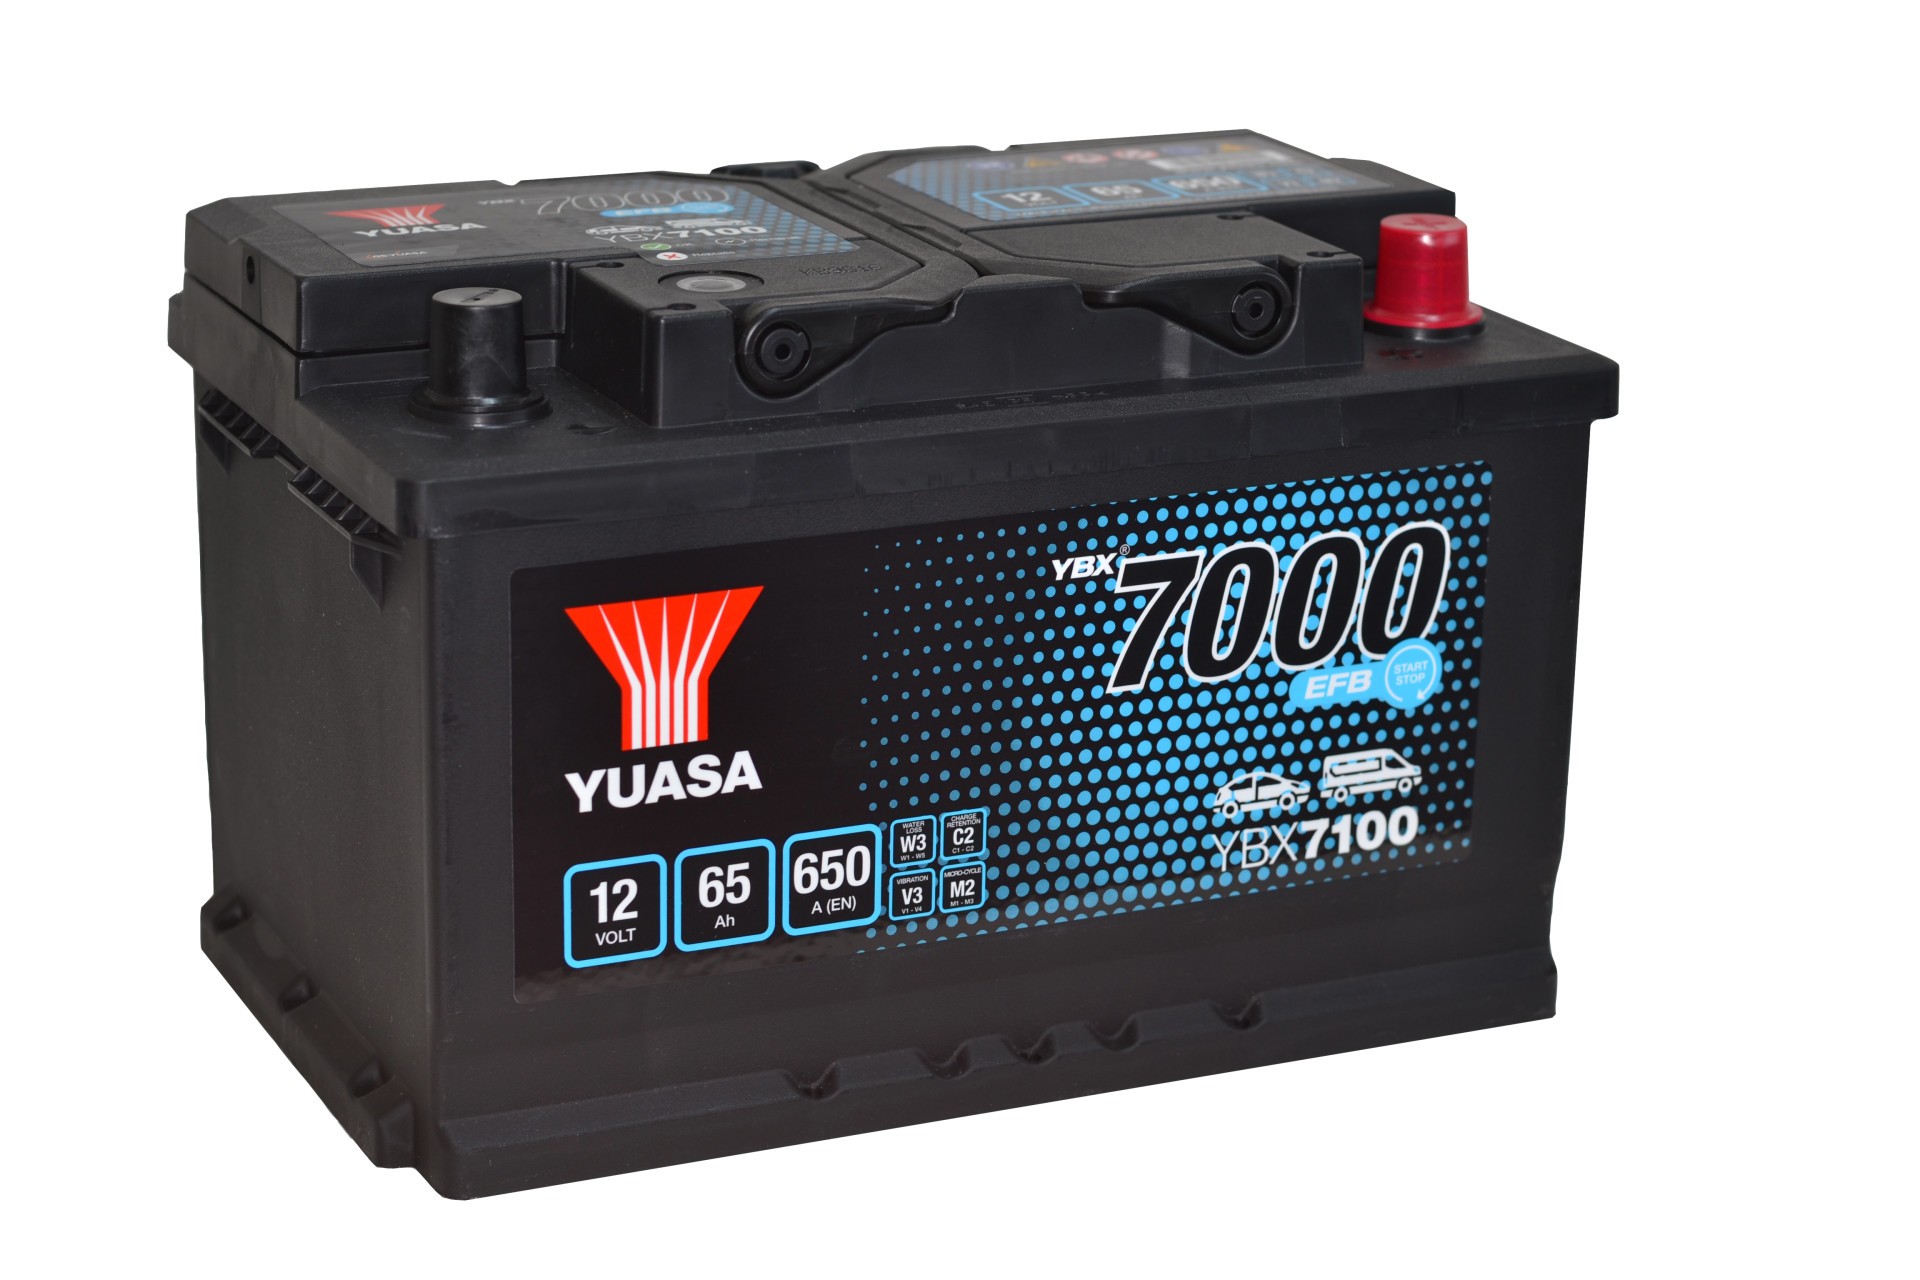 YUASA Autobatterie, Starterbatterie 12V 65Ah 650A 3.55L für FORD C-Max II Focus III Fiesta VI Ecosport Tourneo Connect / Grand V408 Kuga B-Max